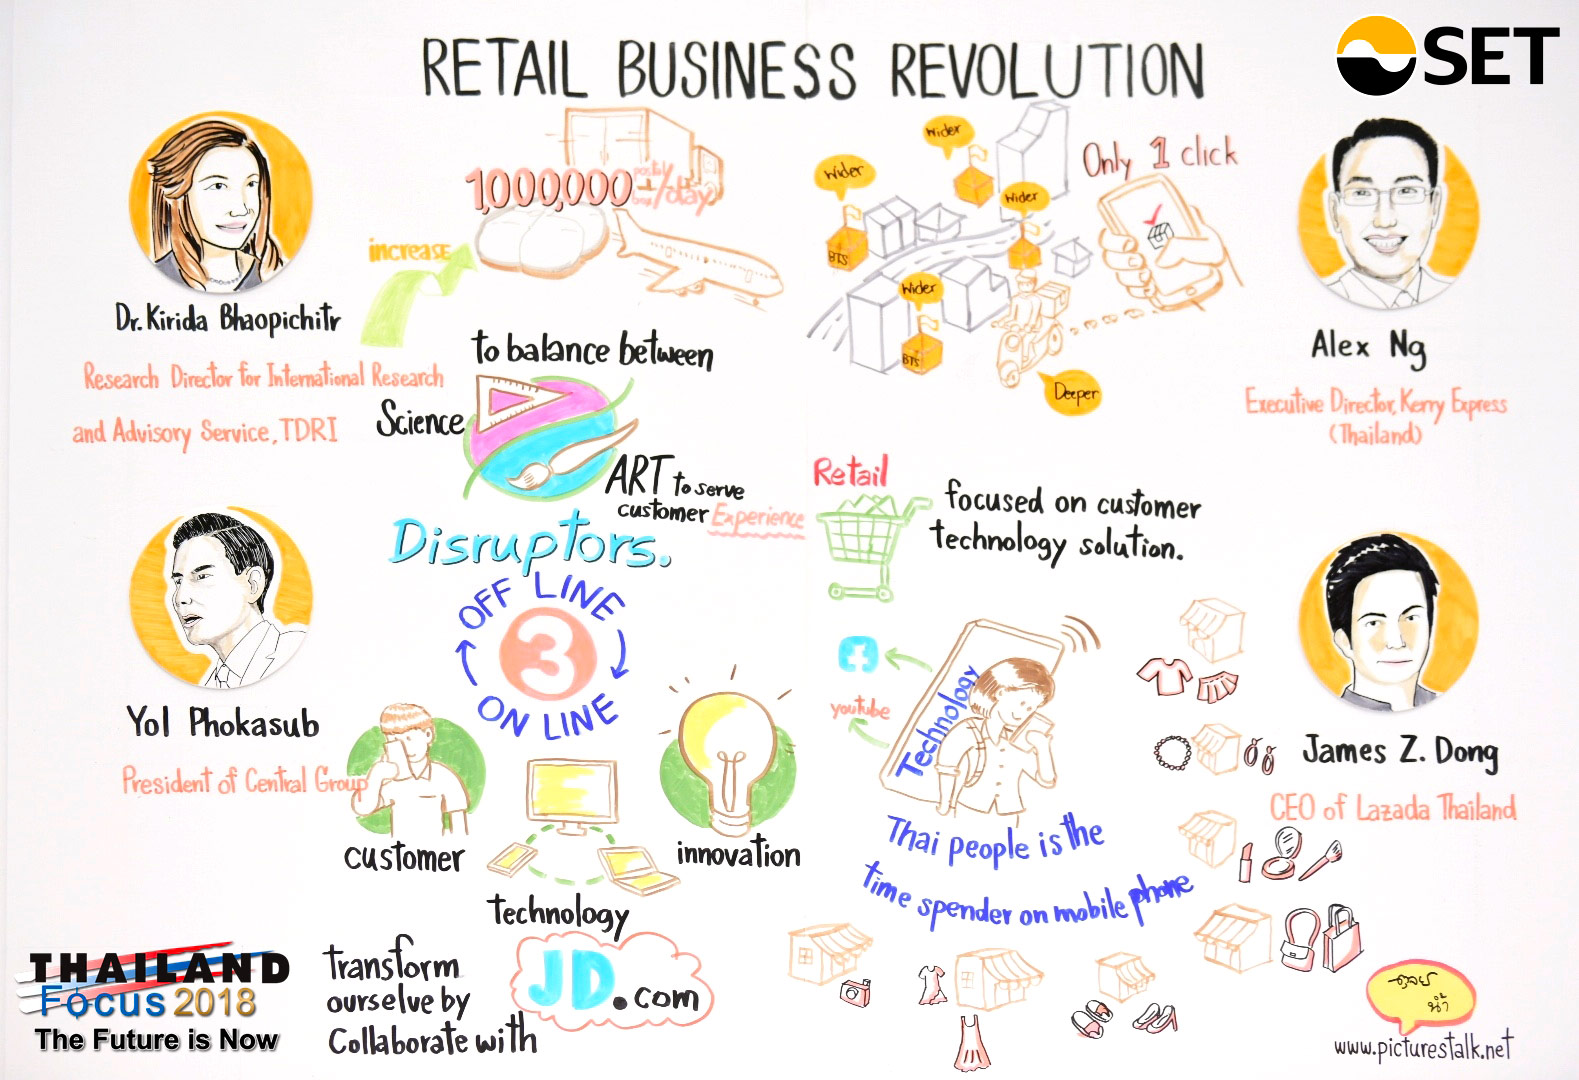 Thailand Focus 2018 - Retails Business Revolution - Mr. Yol Phokasub Mr. Alex Ng Mr. James Z. Dong